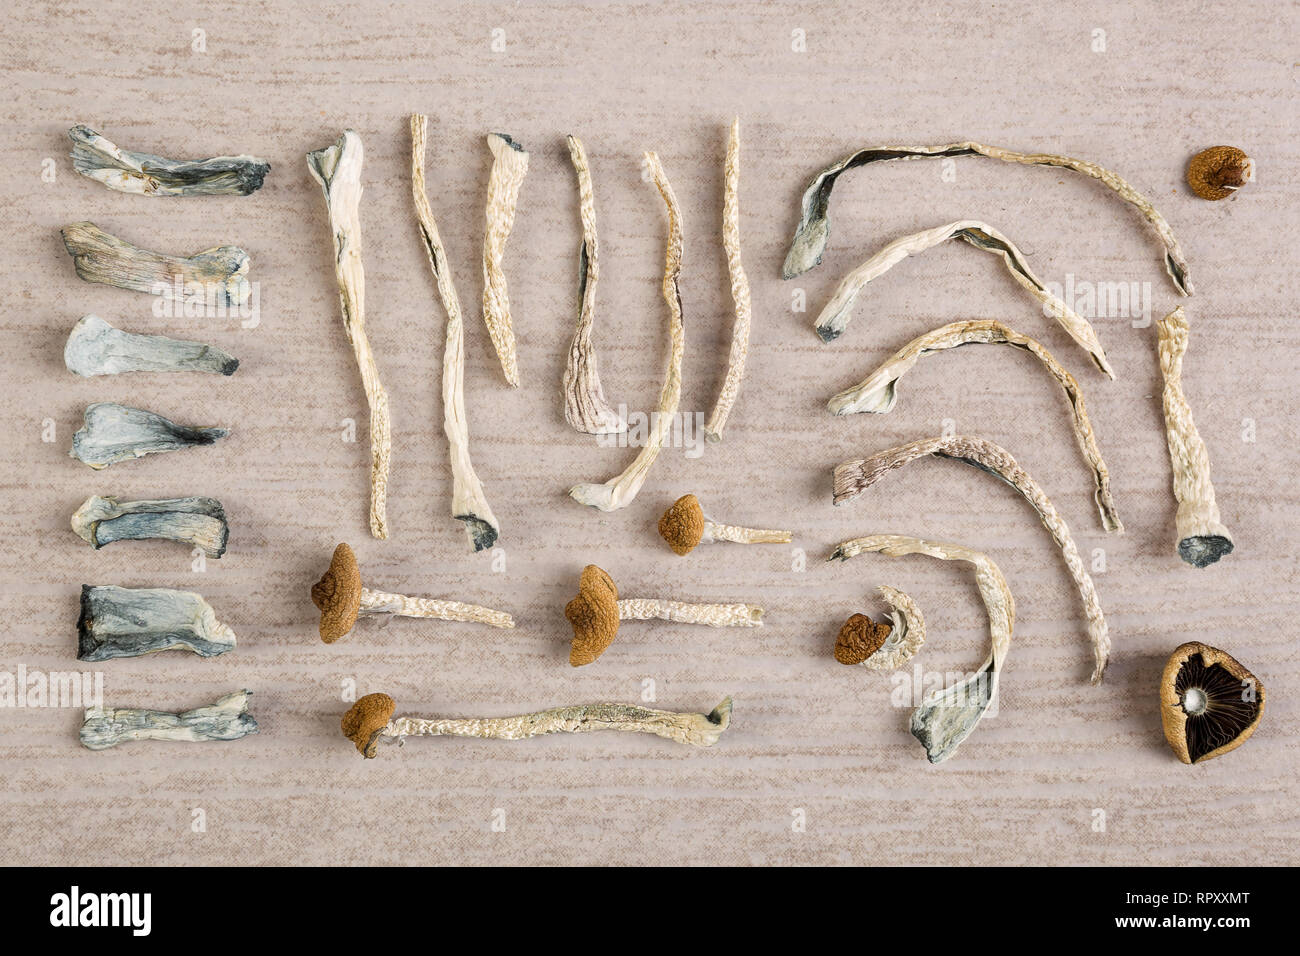 Dried magic mushrooms from above. Medicinal psychoactive shrooms. Stock Photo